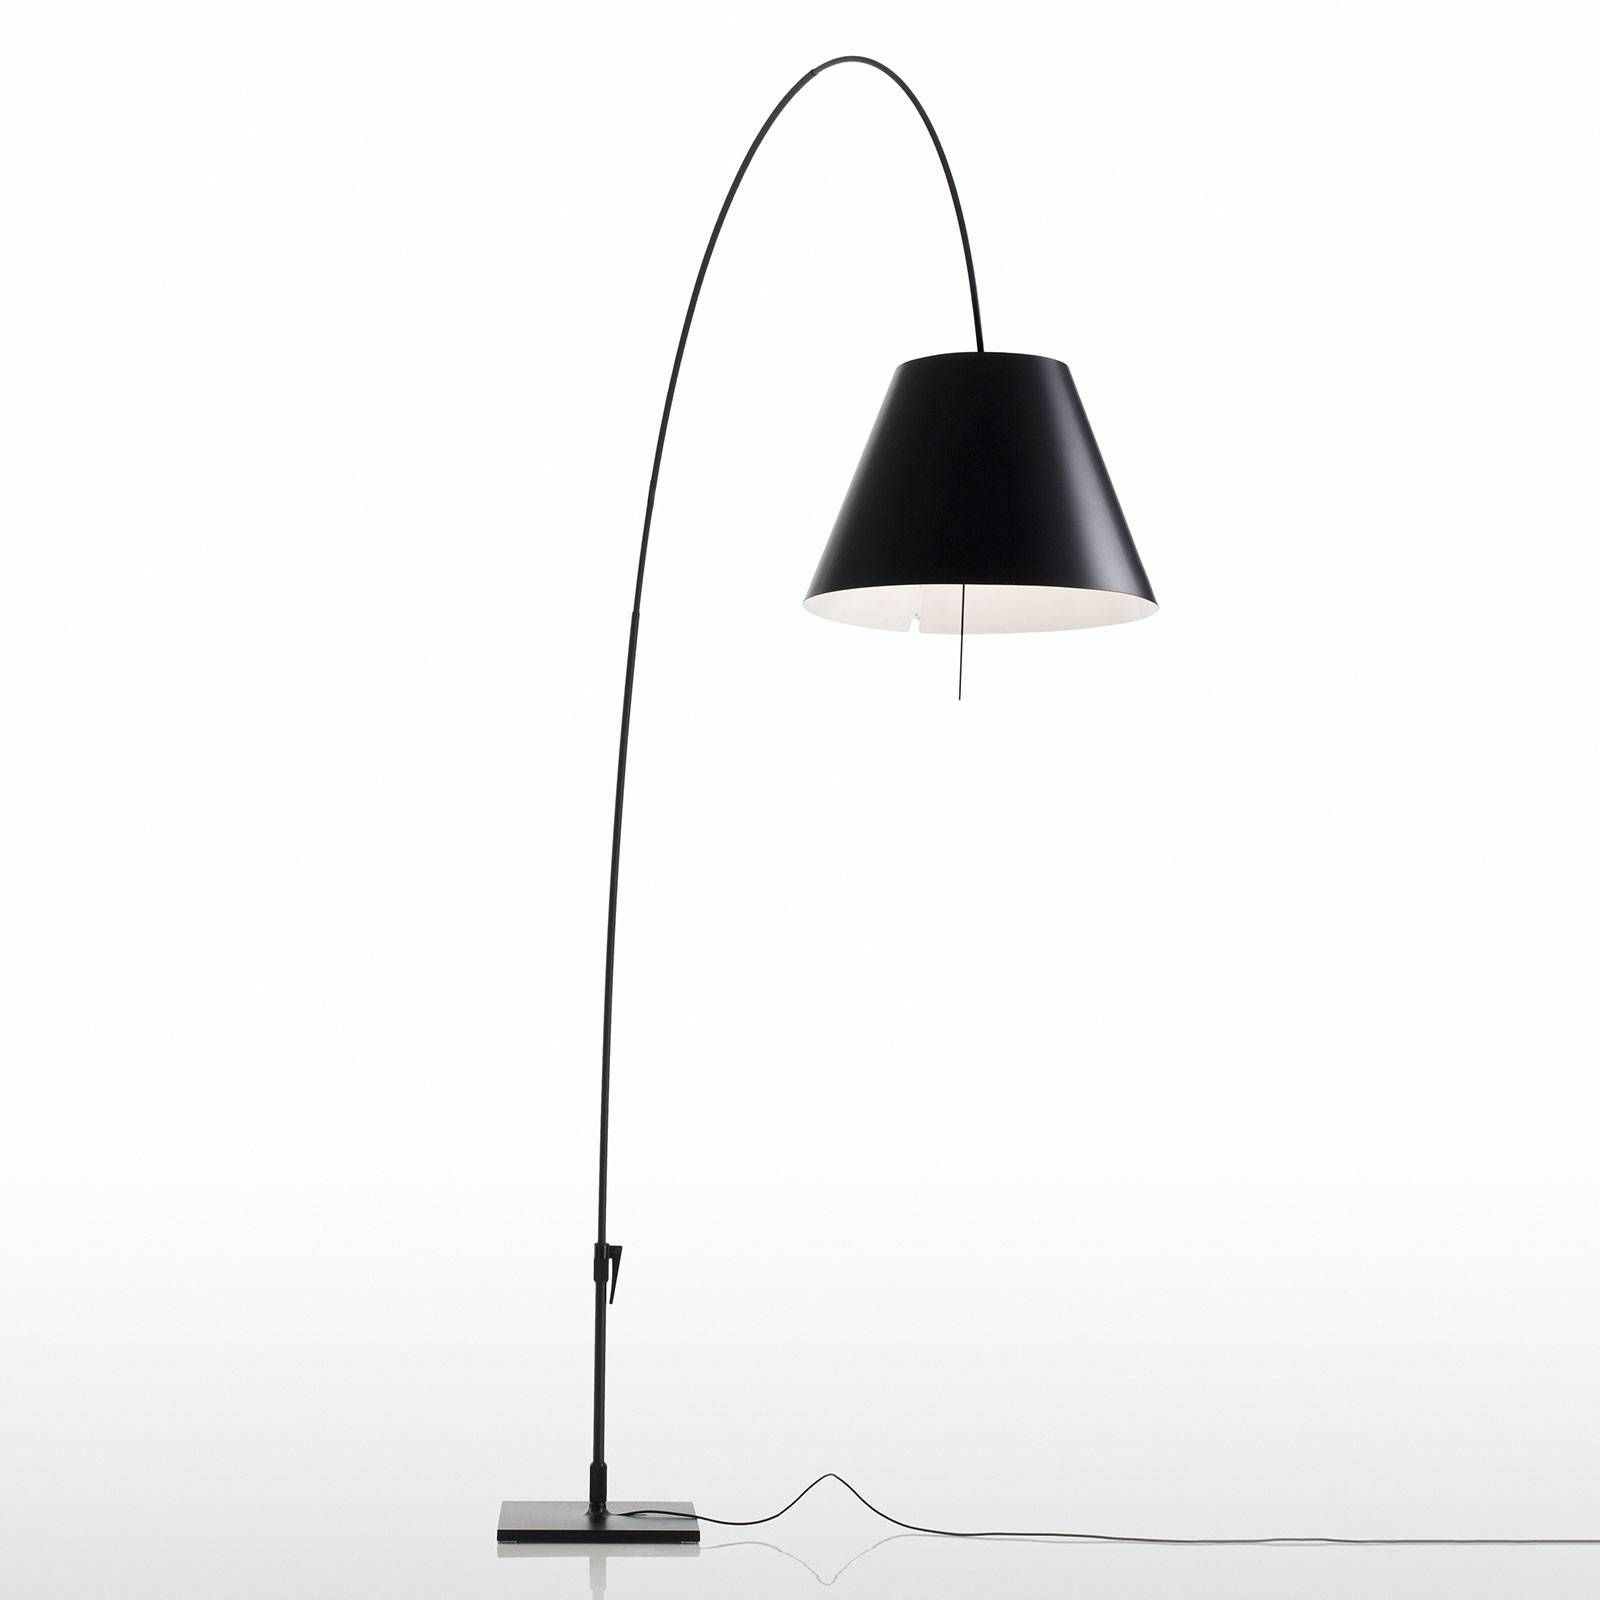 Luceplan Lady Costanza stojaca lampa D13E d čierna, Obývacia izba / jedáleň, hliník, polykarbonát, E27, 105W, K: 250cm